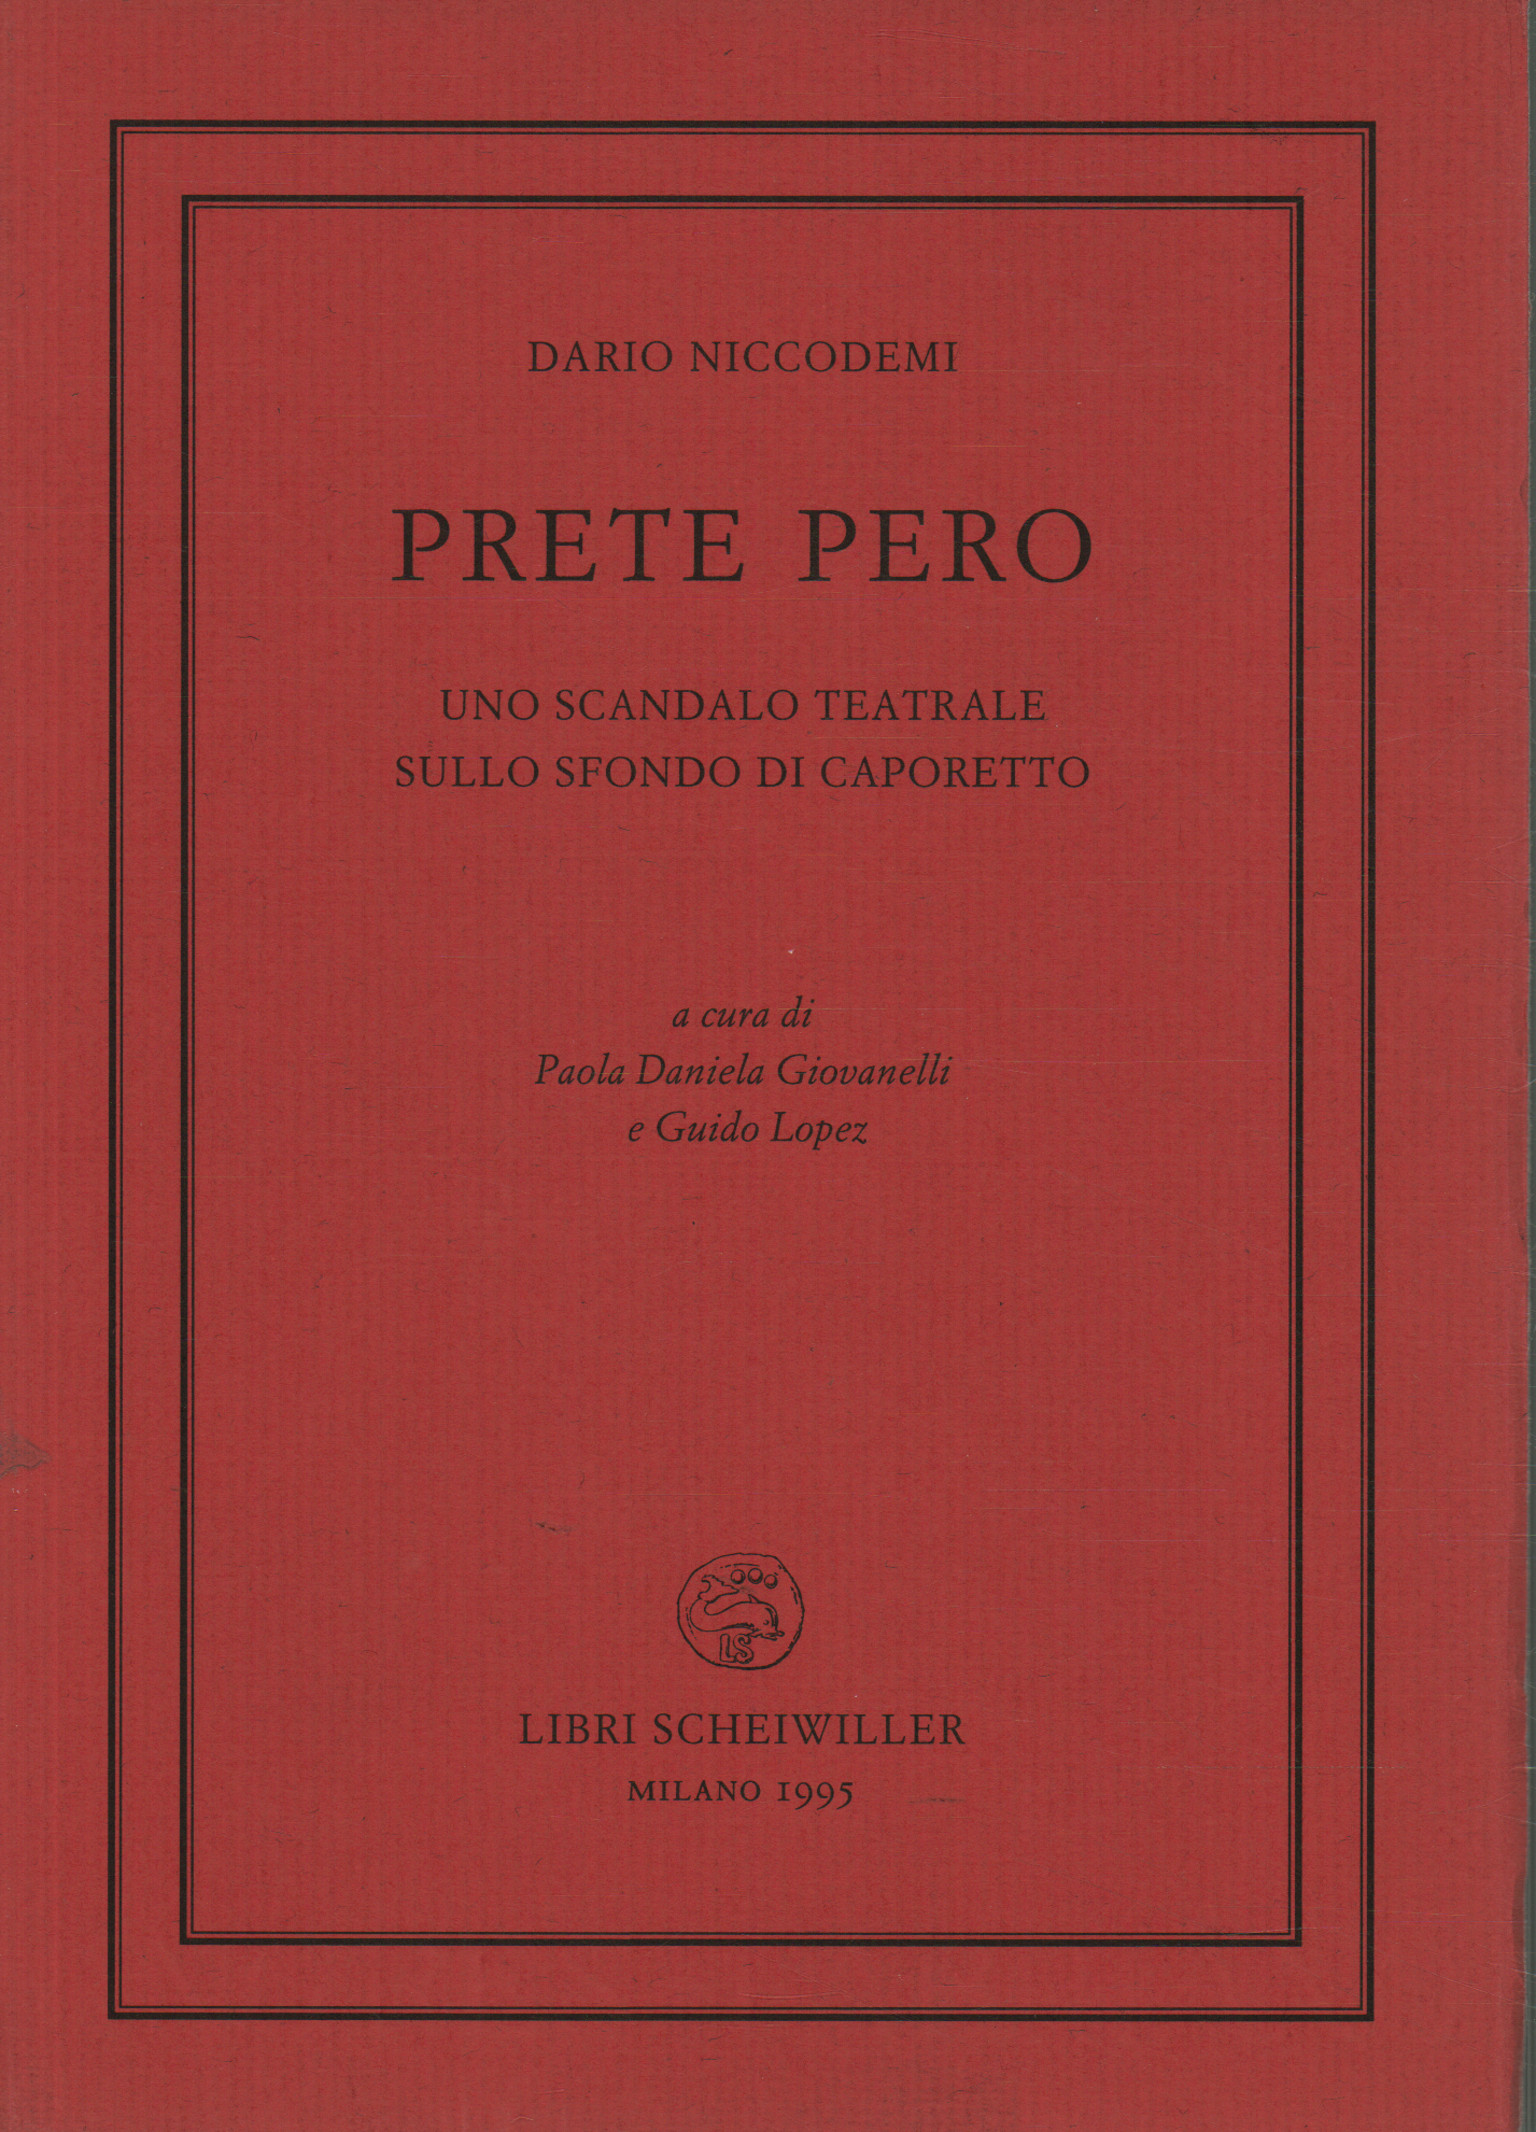 Priest Pero, Dario Niccodemi